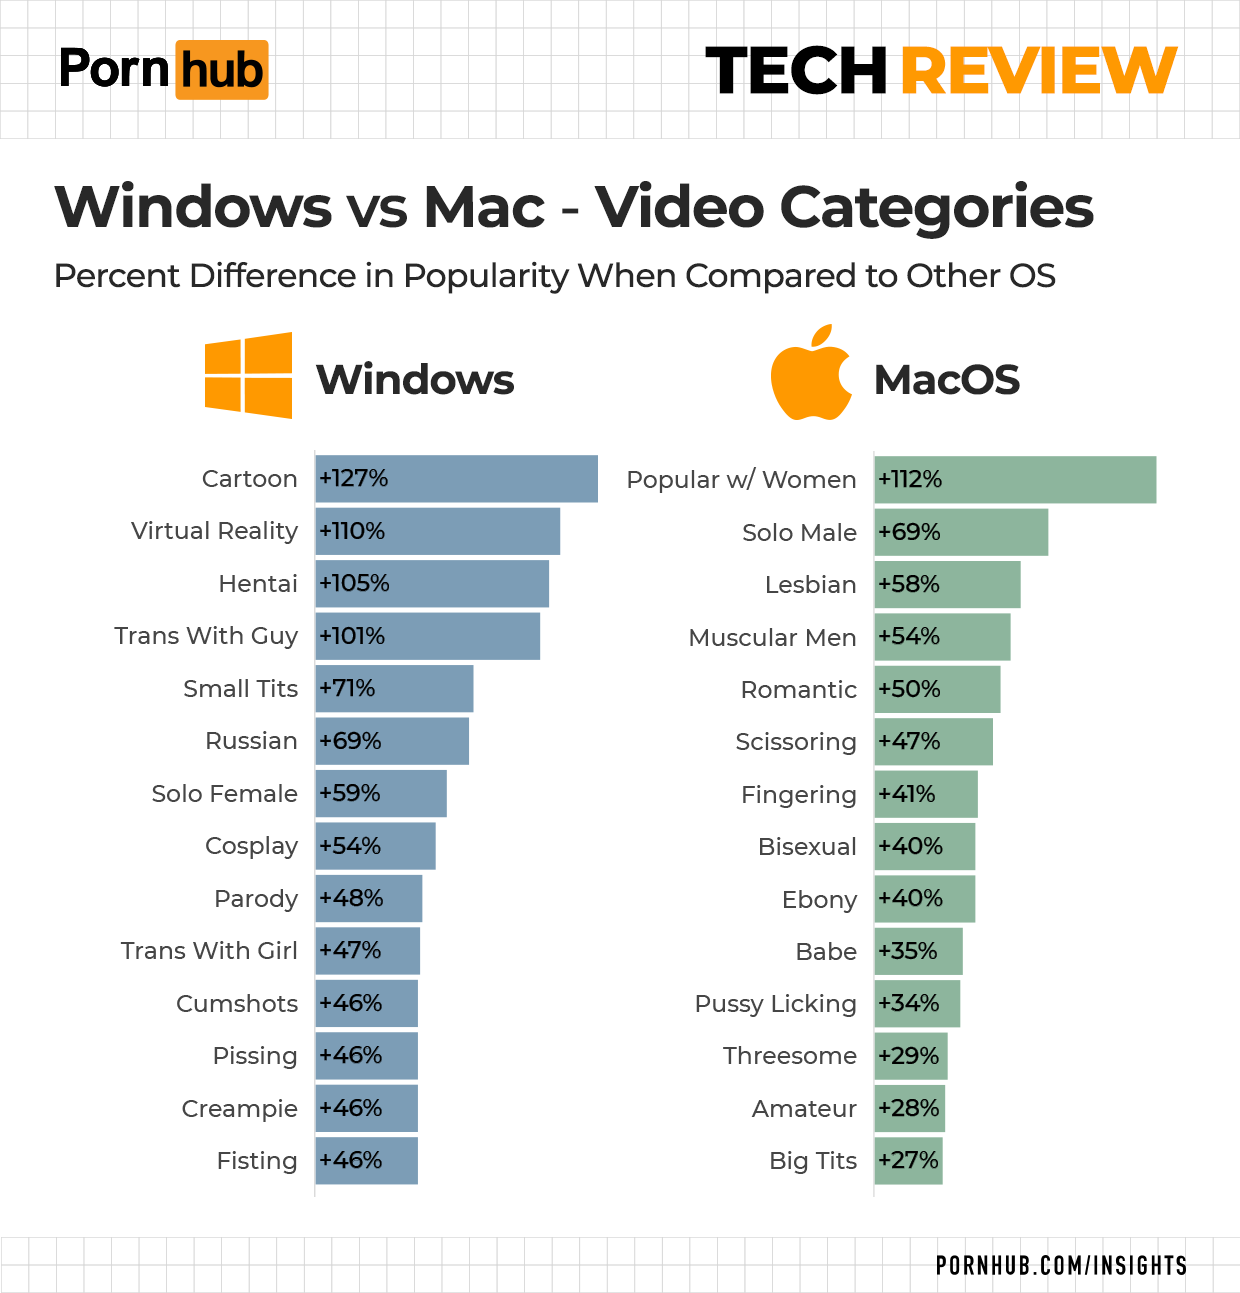 The Pornhub Tech Review photo